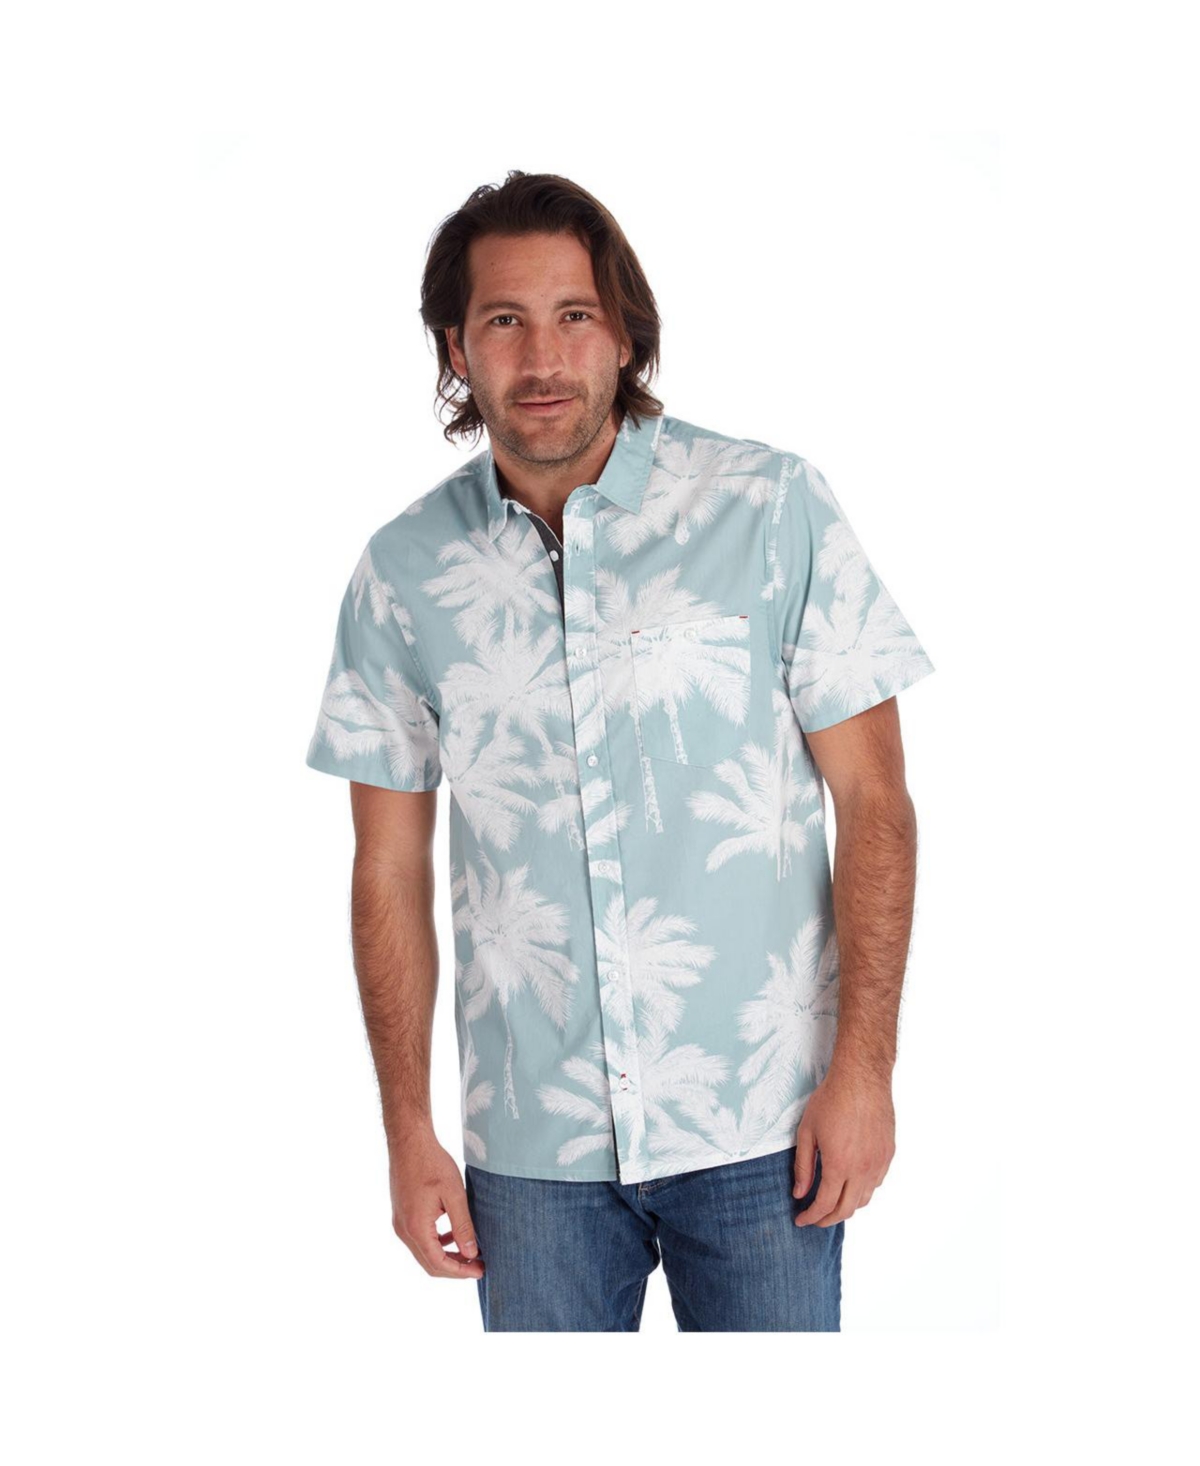 Clothing Men's Short Sleeve Palm Tree Shirt - Seafoam